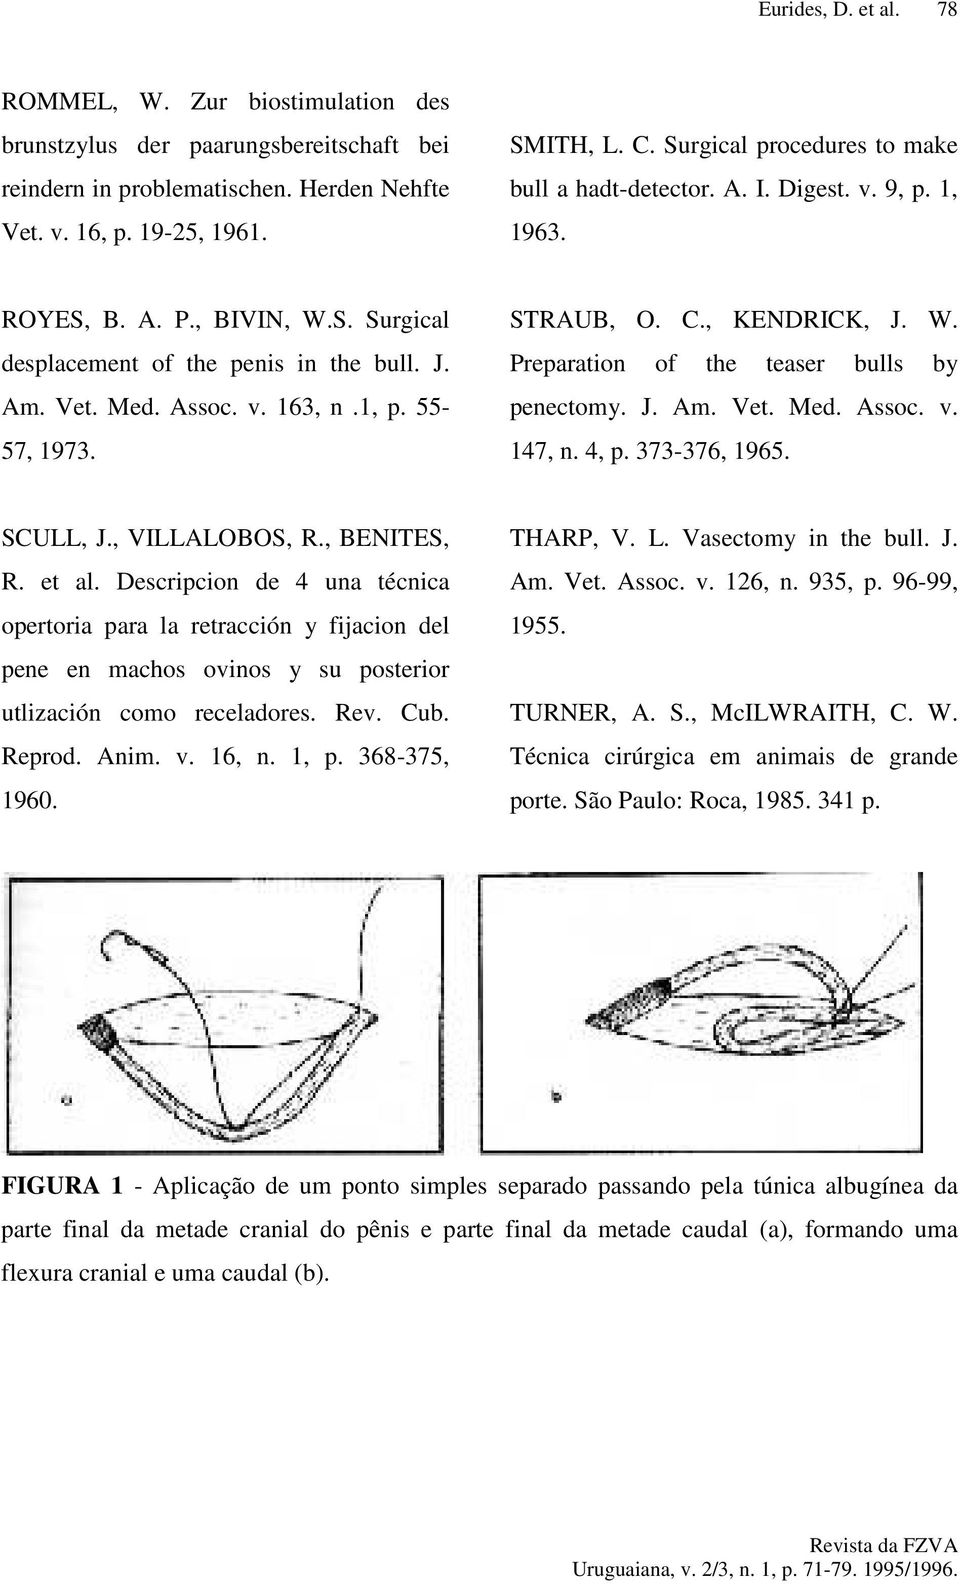 55-57, 1973. STRAUB, O. C., KENDRICK, J. W. Preparation of the teaser bulls by penectomy. J. Am. Vet. Med. Assoc. v. 147, n. 4, p. 373-376, 1965. SCULL, J., VILLALOBOS, R., BENITES, R. et al.